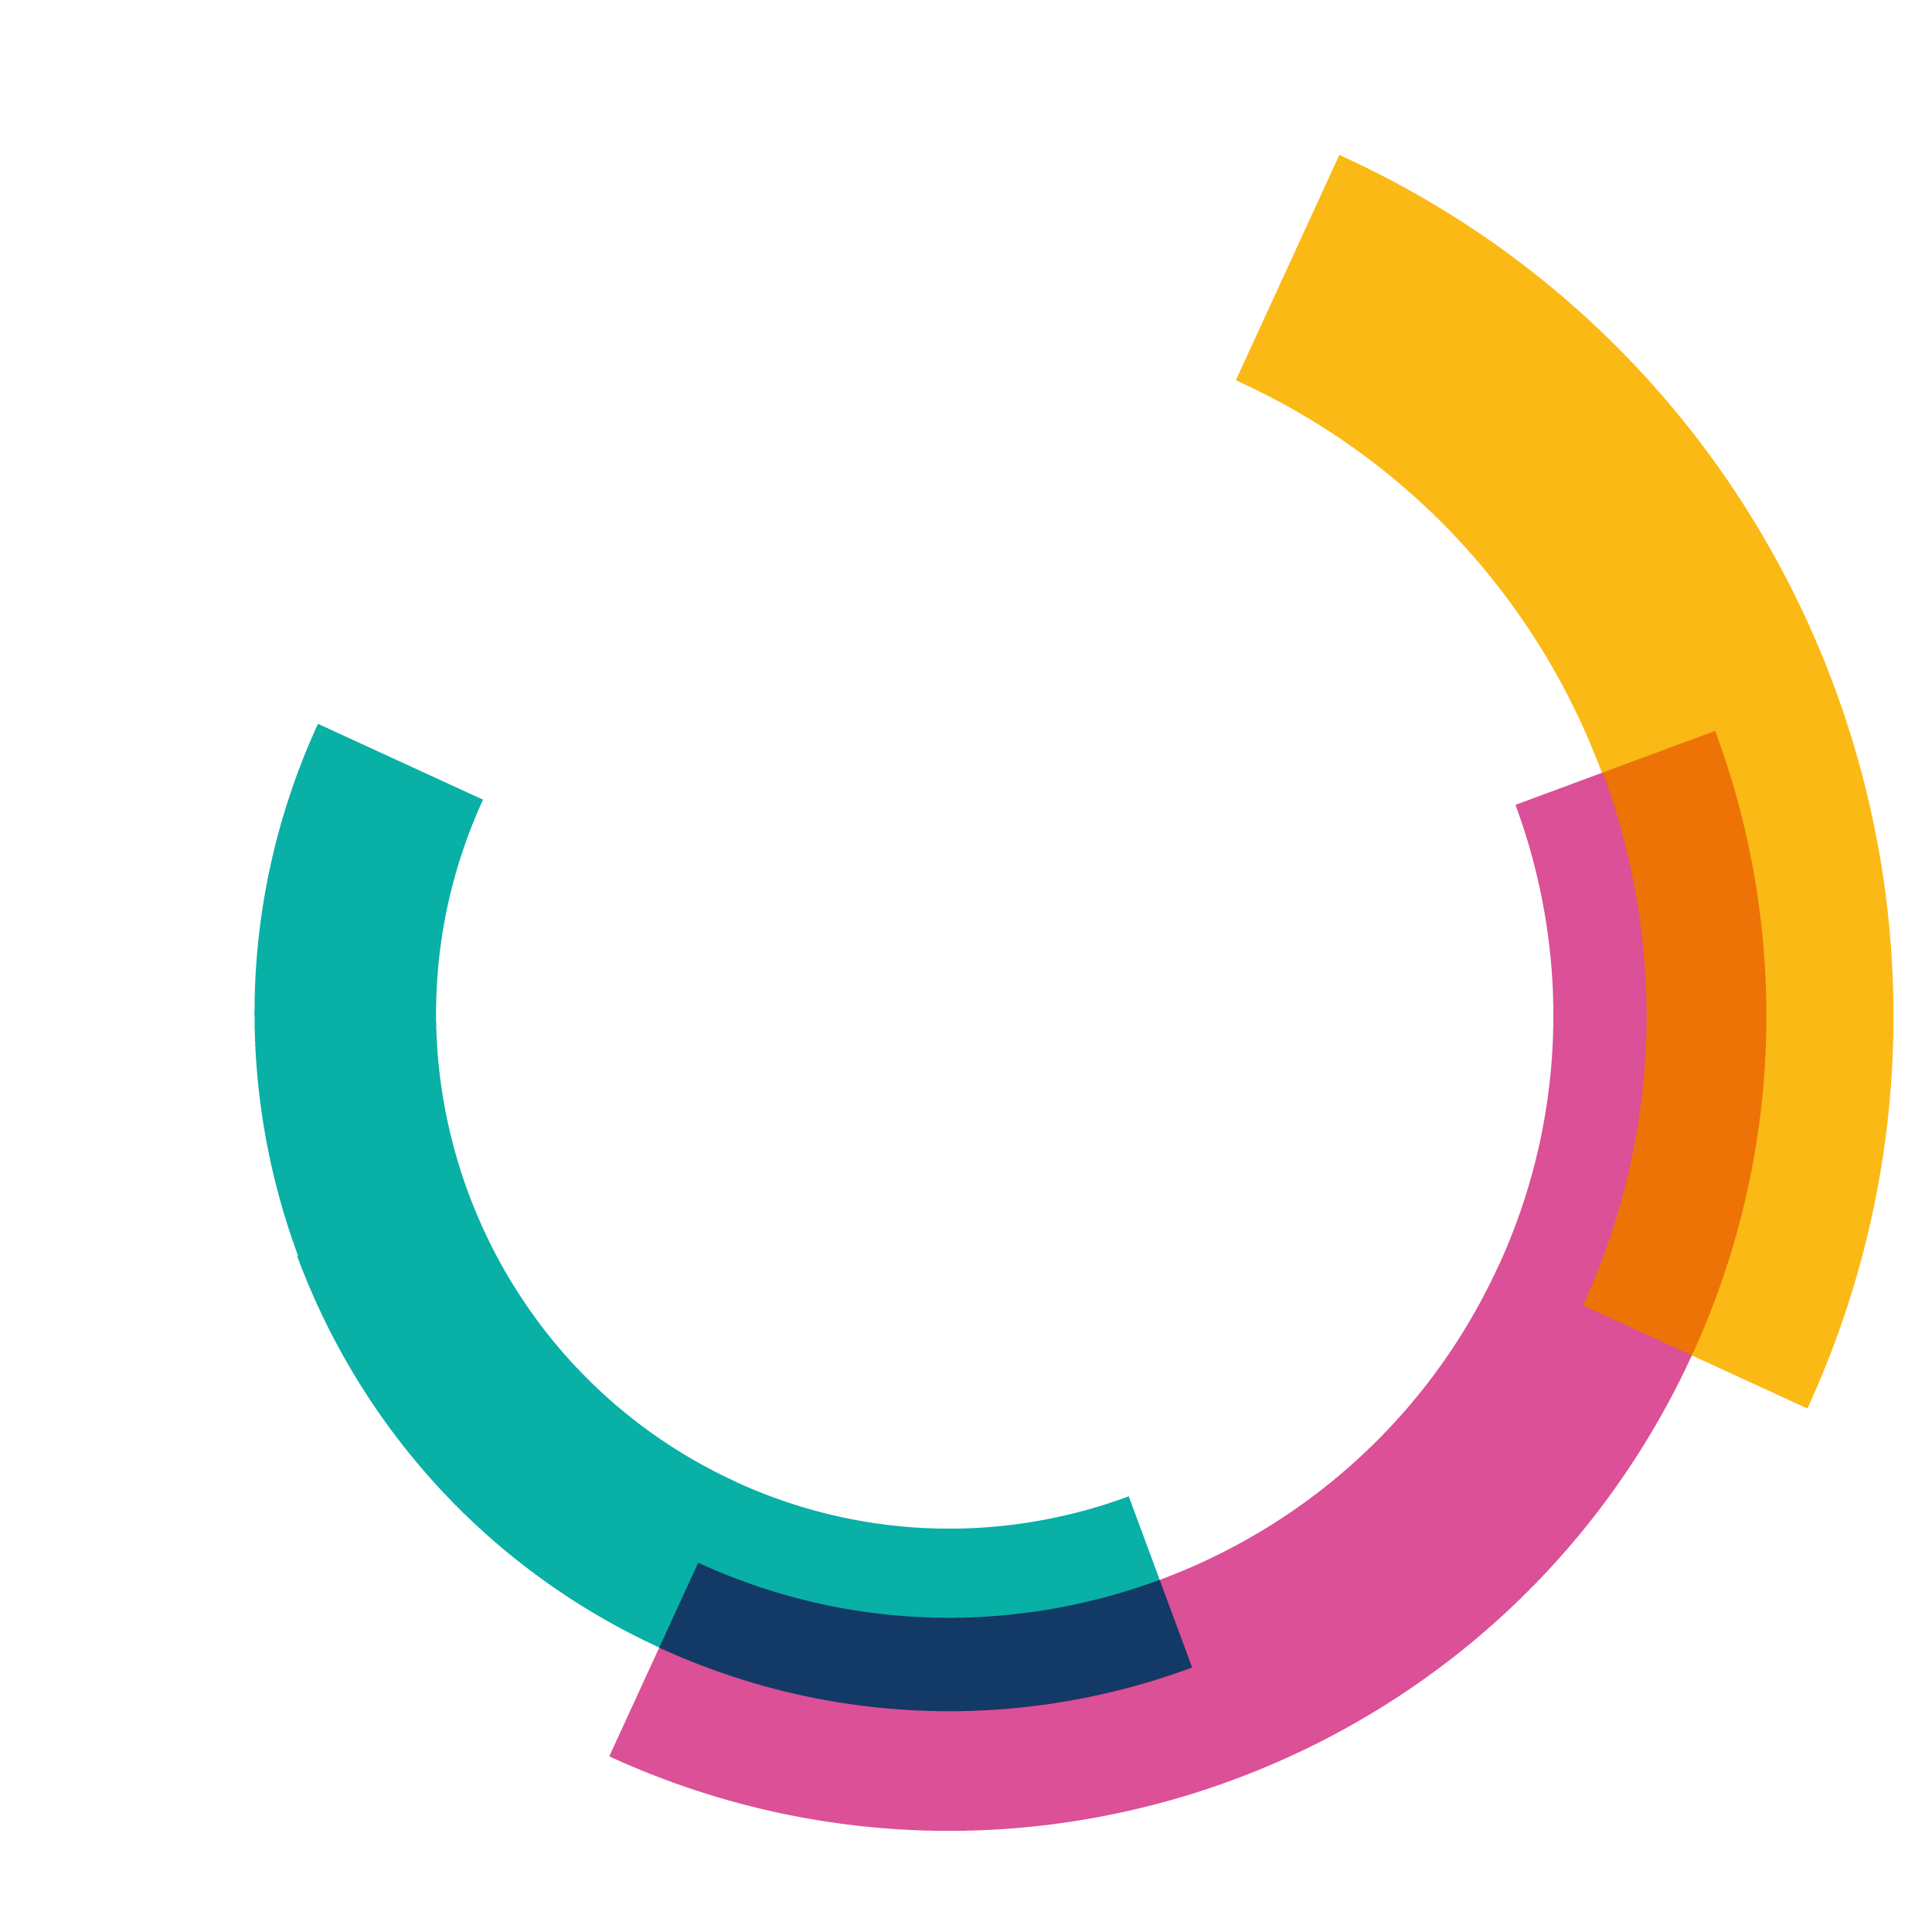 Geert Jan Kroon